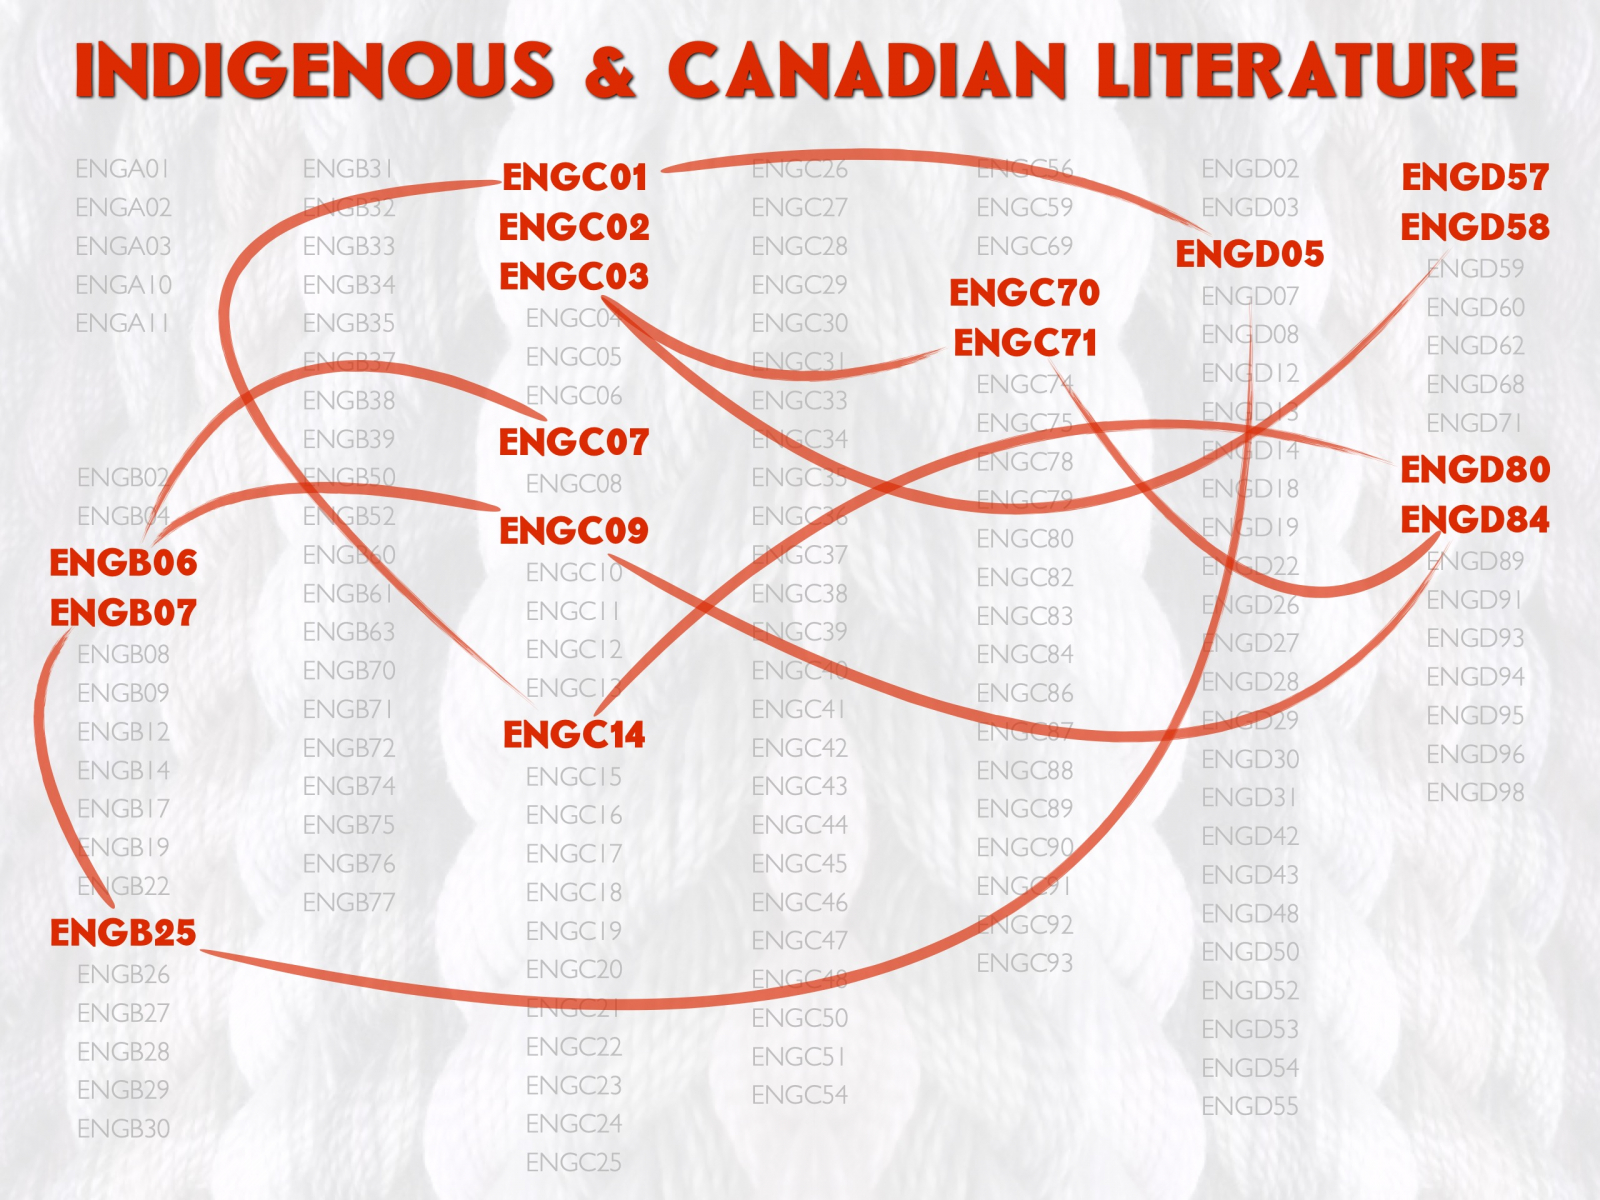 Indigenous & Canadian Literature road map